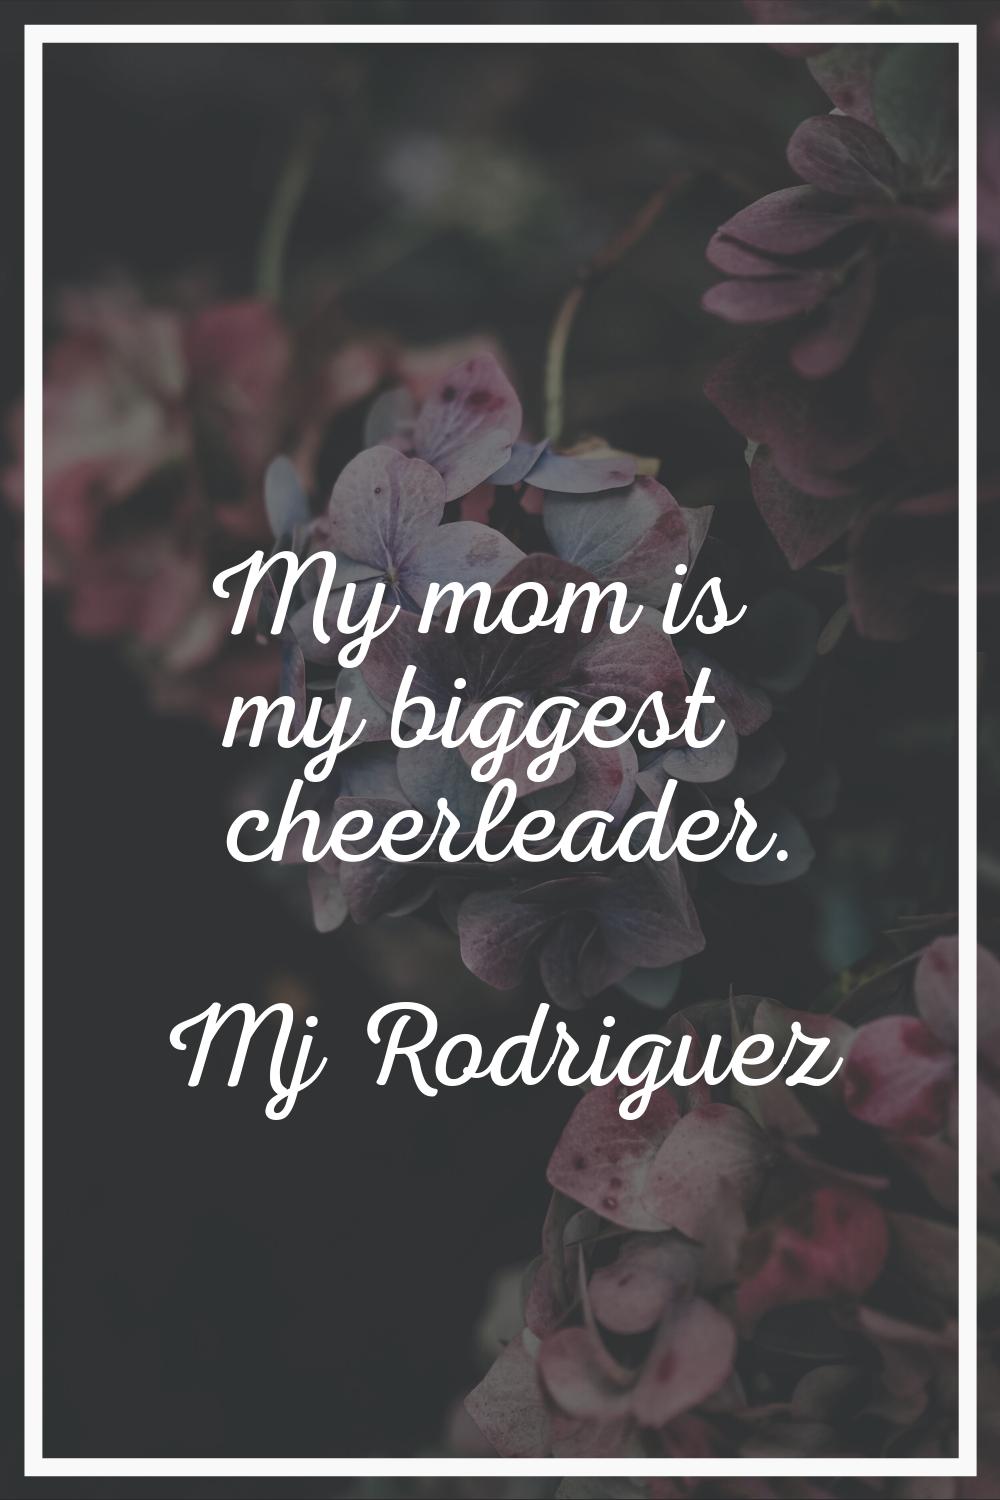 My mom is my biggest cheerleader.